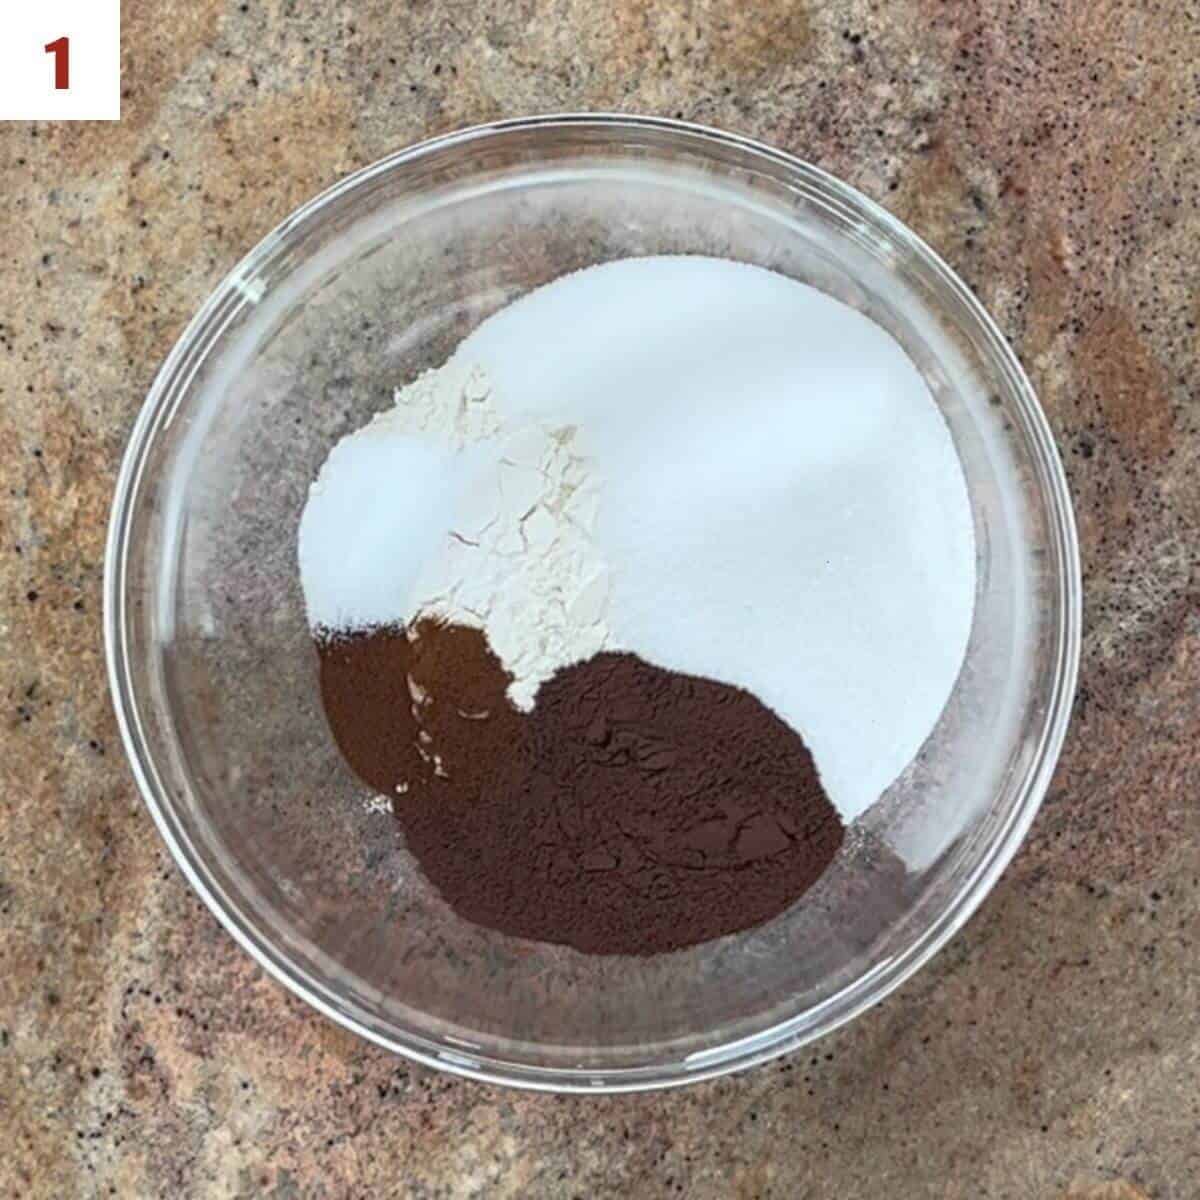 Combining the flour, sugar, cocoa powder, espresso powder, baking soda, & salt.